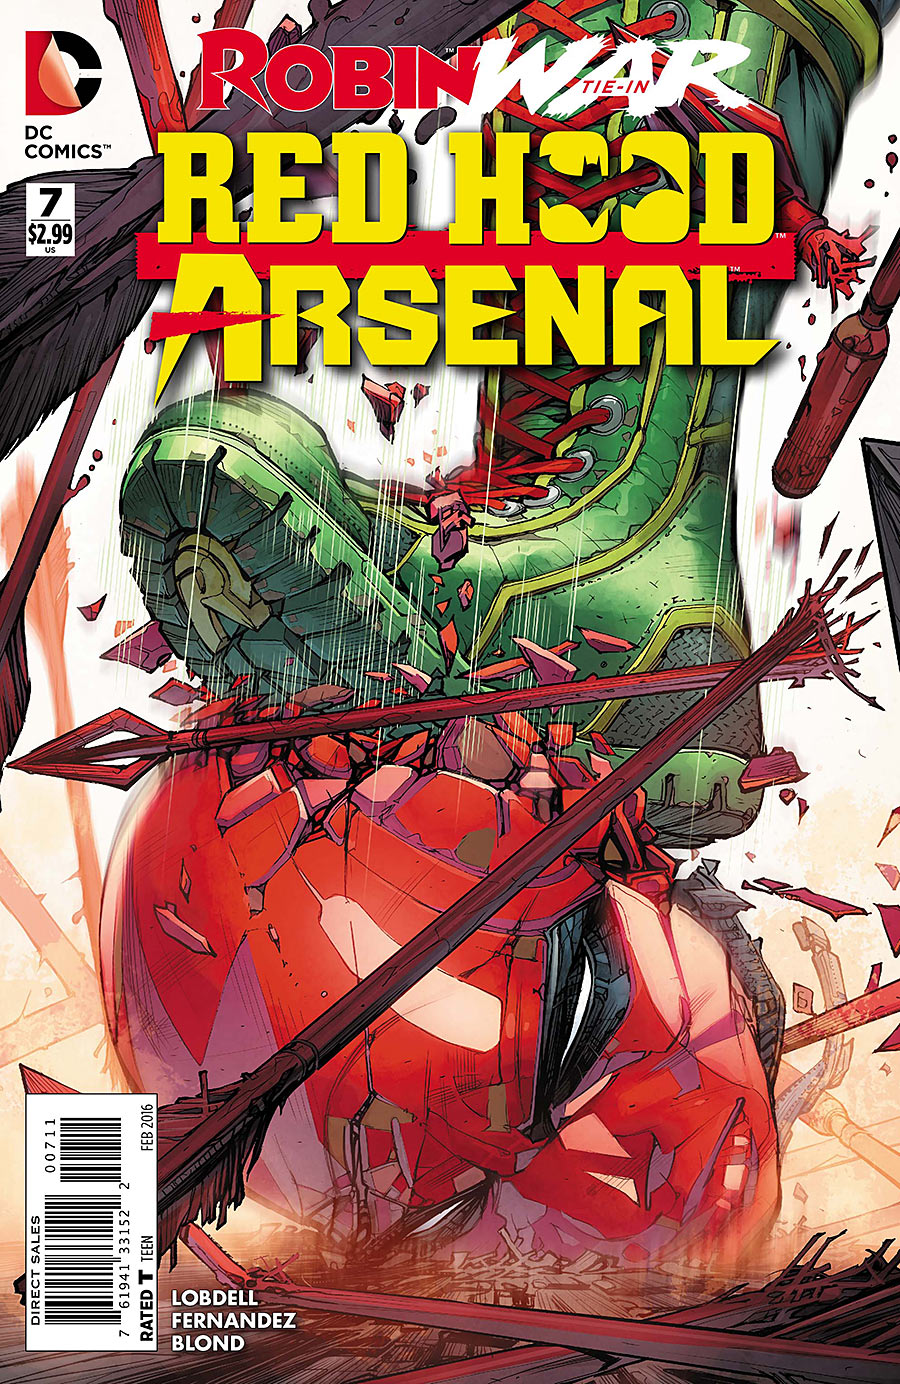 Red Hood/Arsenal (Volume 1) Issue 7 | Batman Wiki | Fandom